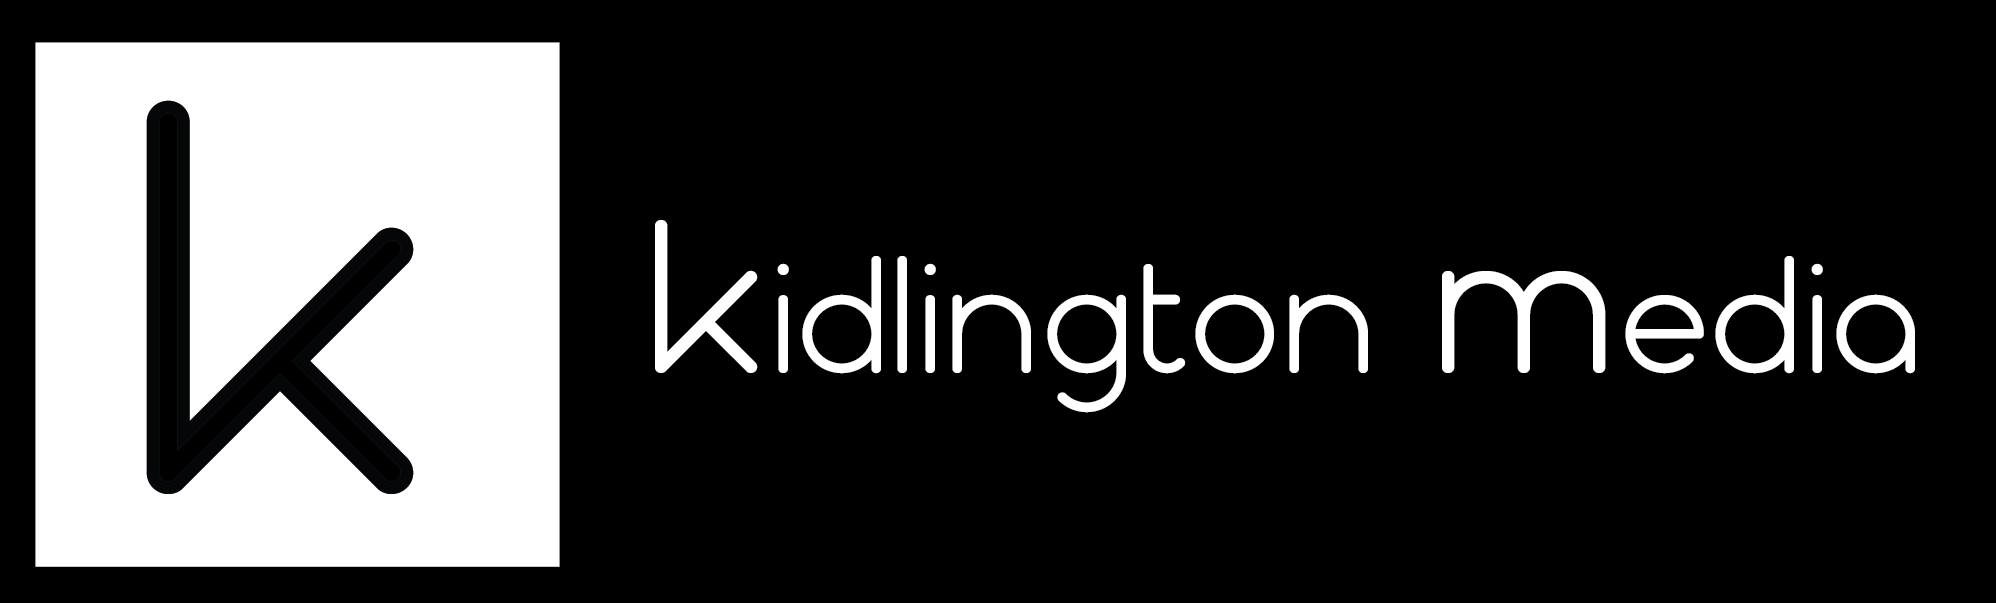 Kidlington Media. Drone, Cameras and Video Production